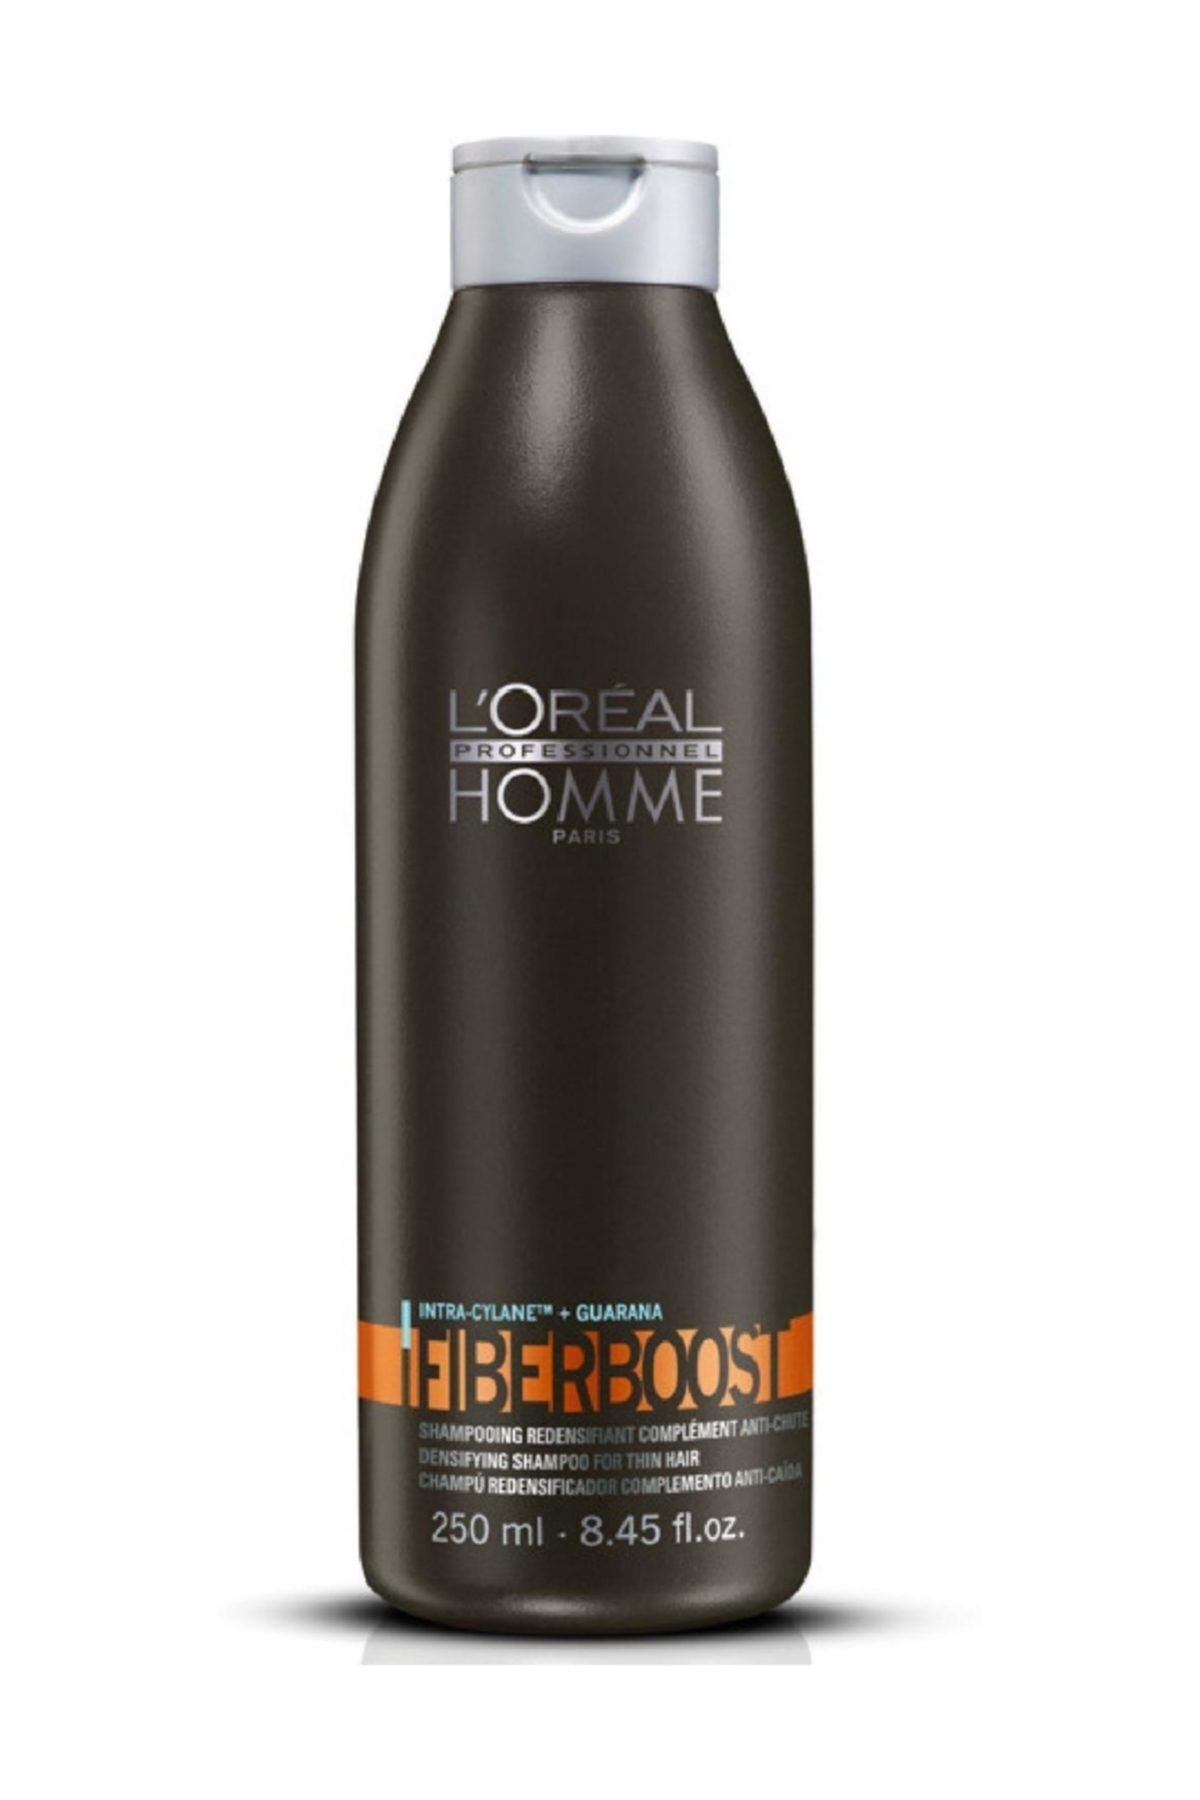 L'oreal Professionnel Homme Fiberboost Erkek Saç Şampuanı 250 ml